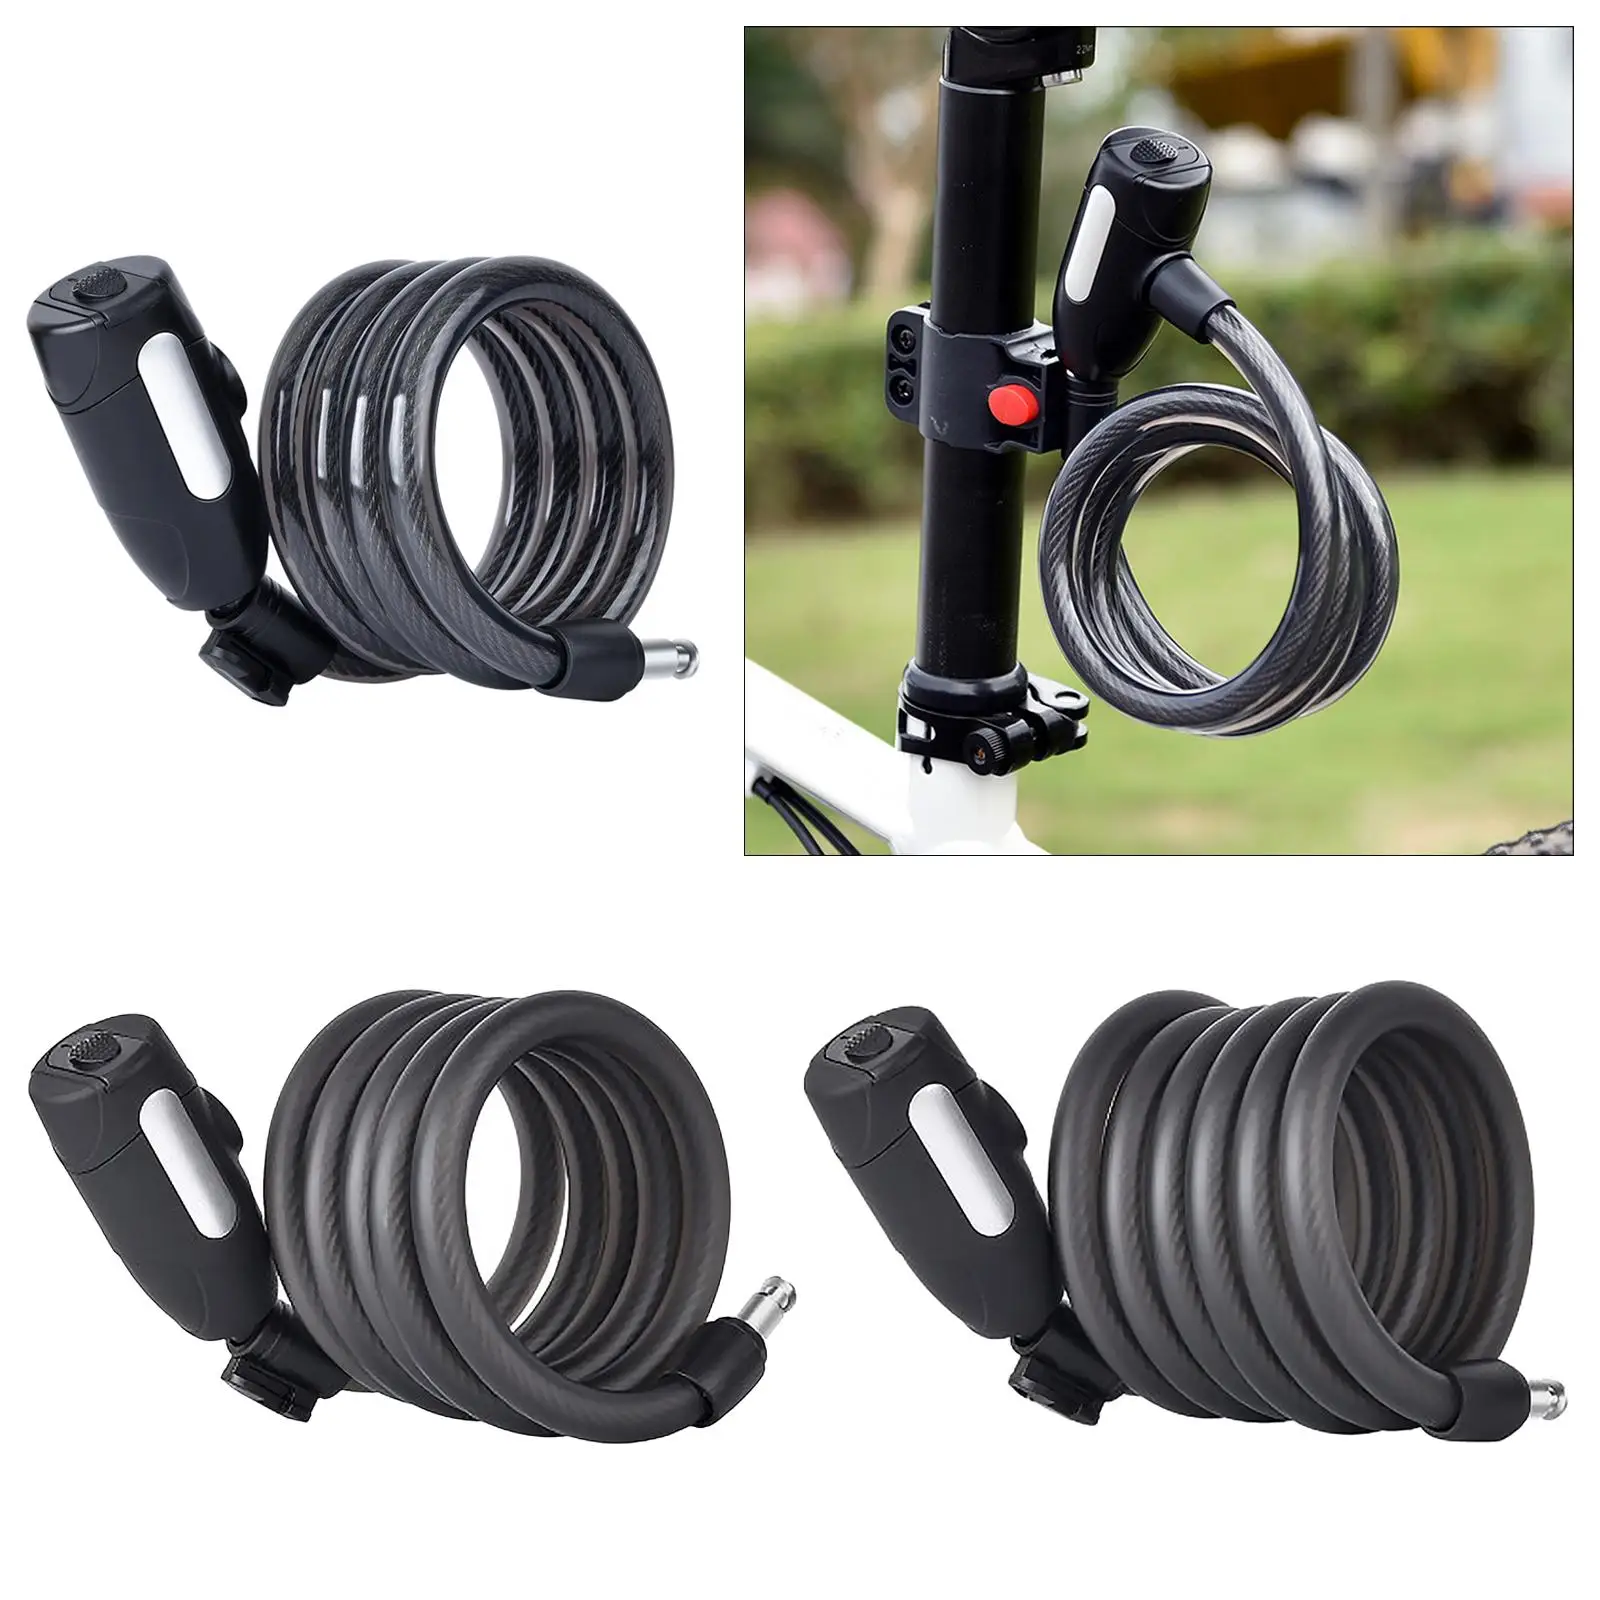 Bike Lock Cable, Heavy Duty, Chain with Bike